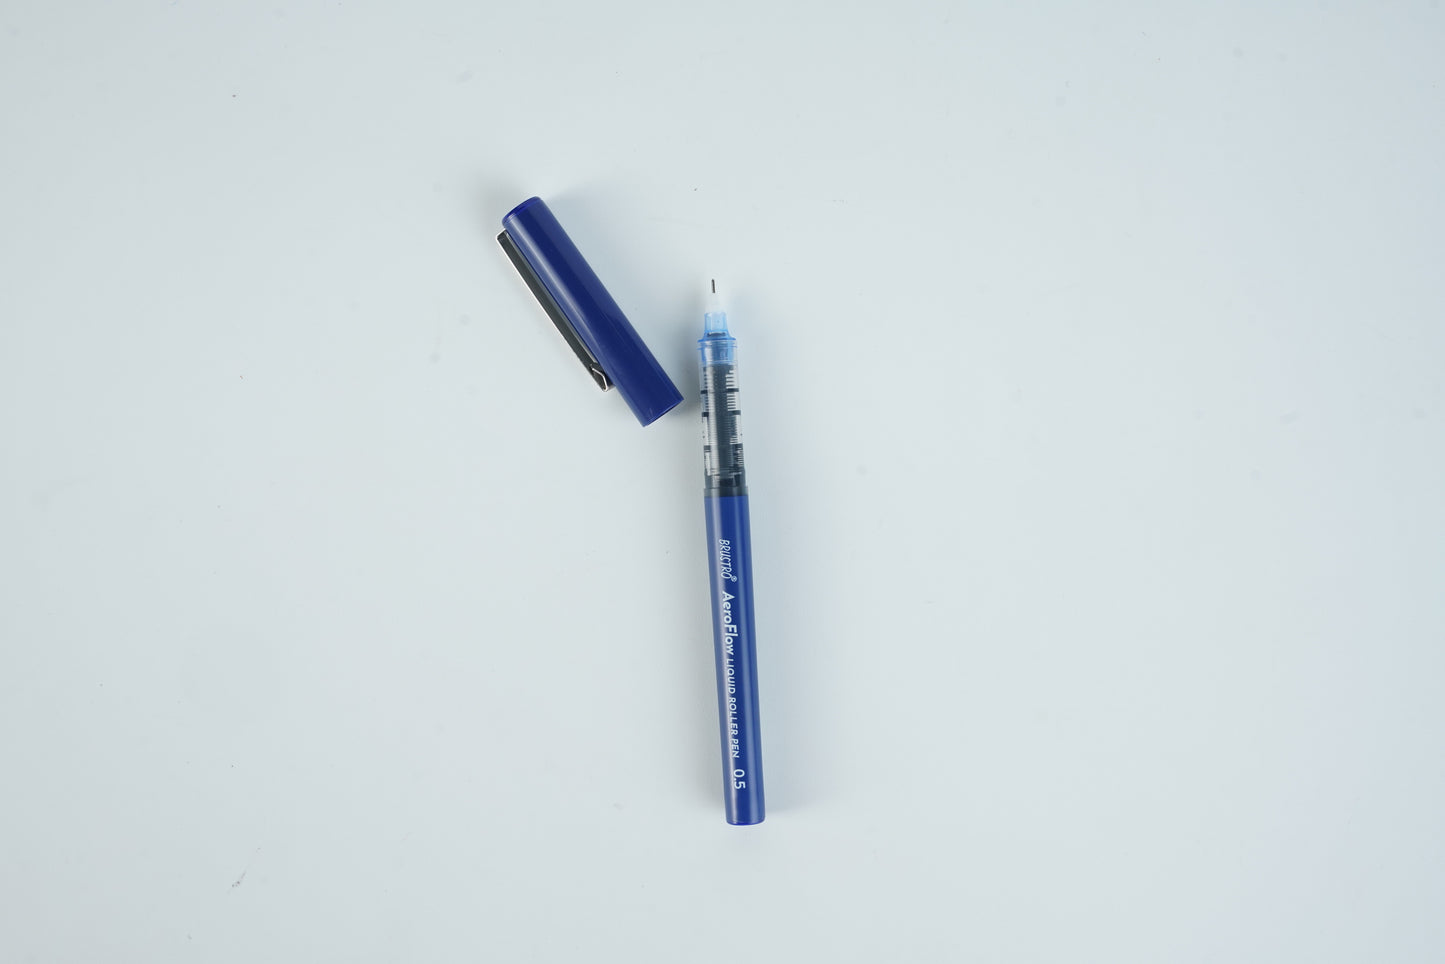 BRUSTRO AeroFlow Liquid Ink Rollerball Pens 0.5 Micro Tip Pack of 3 (Blue ink)